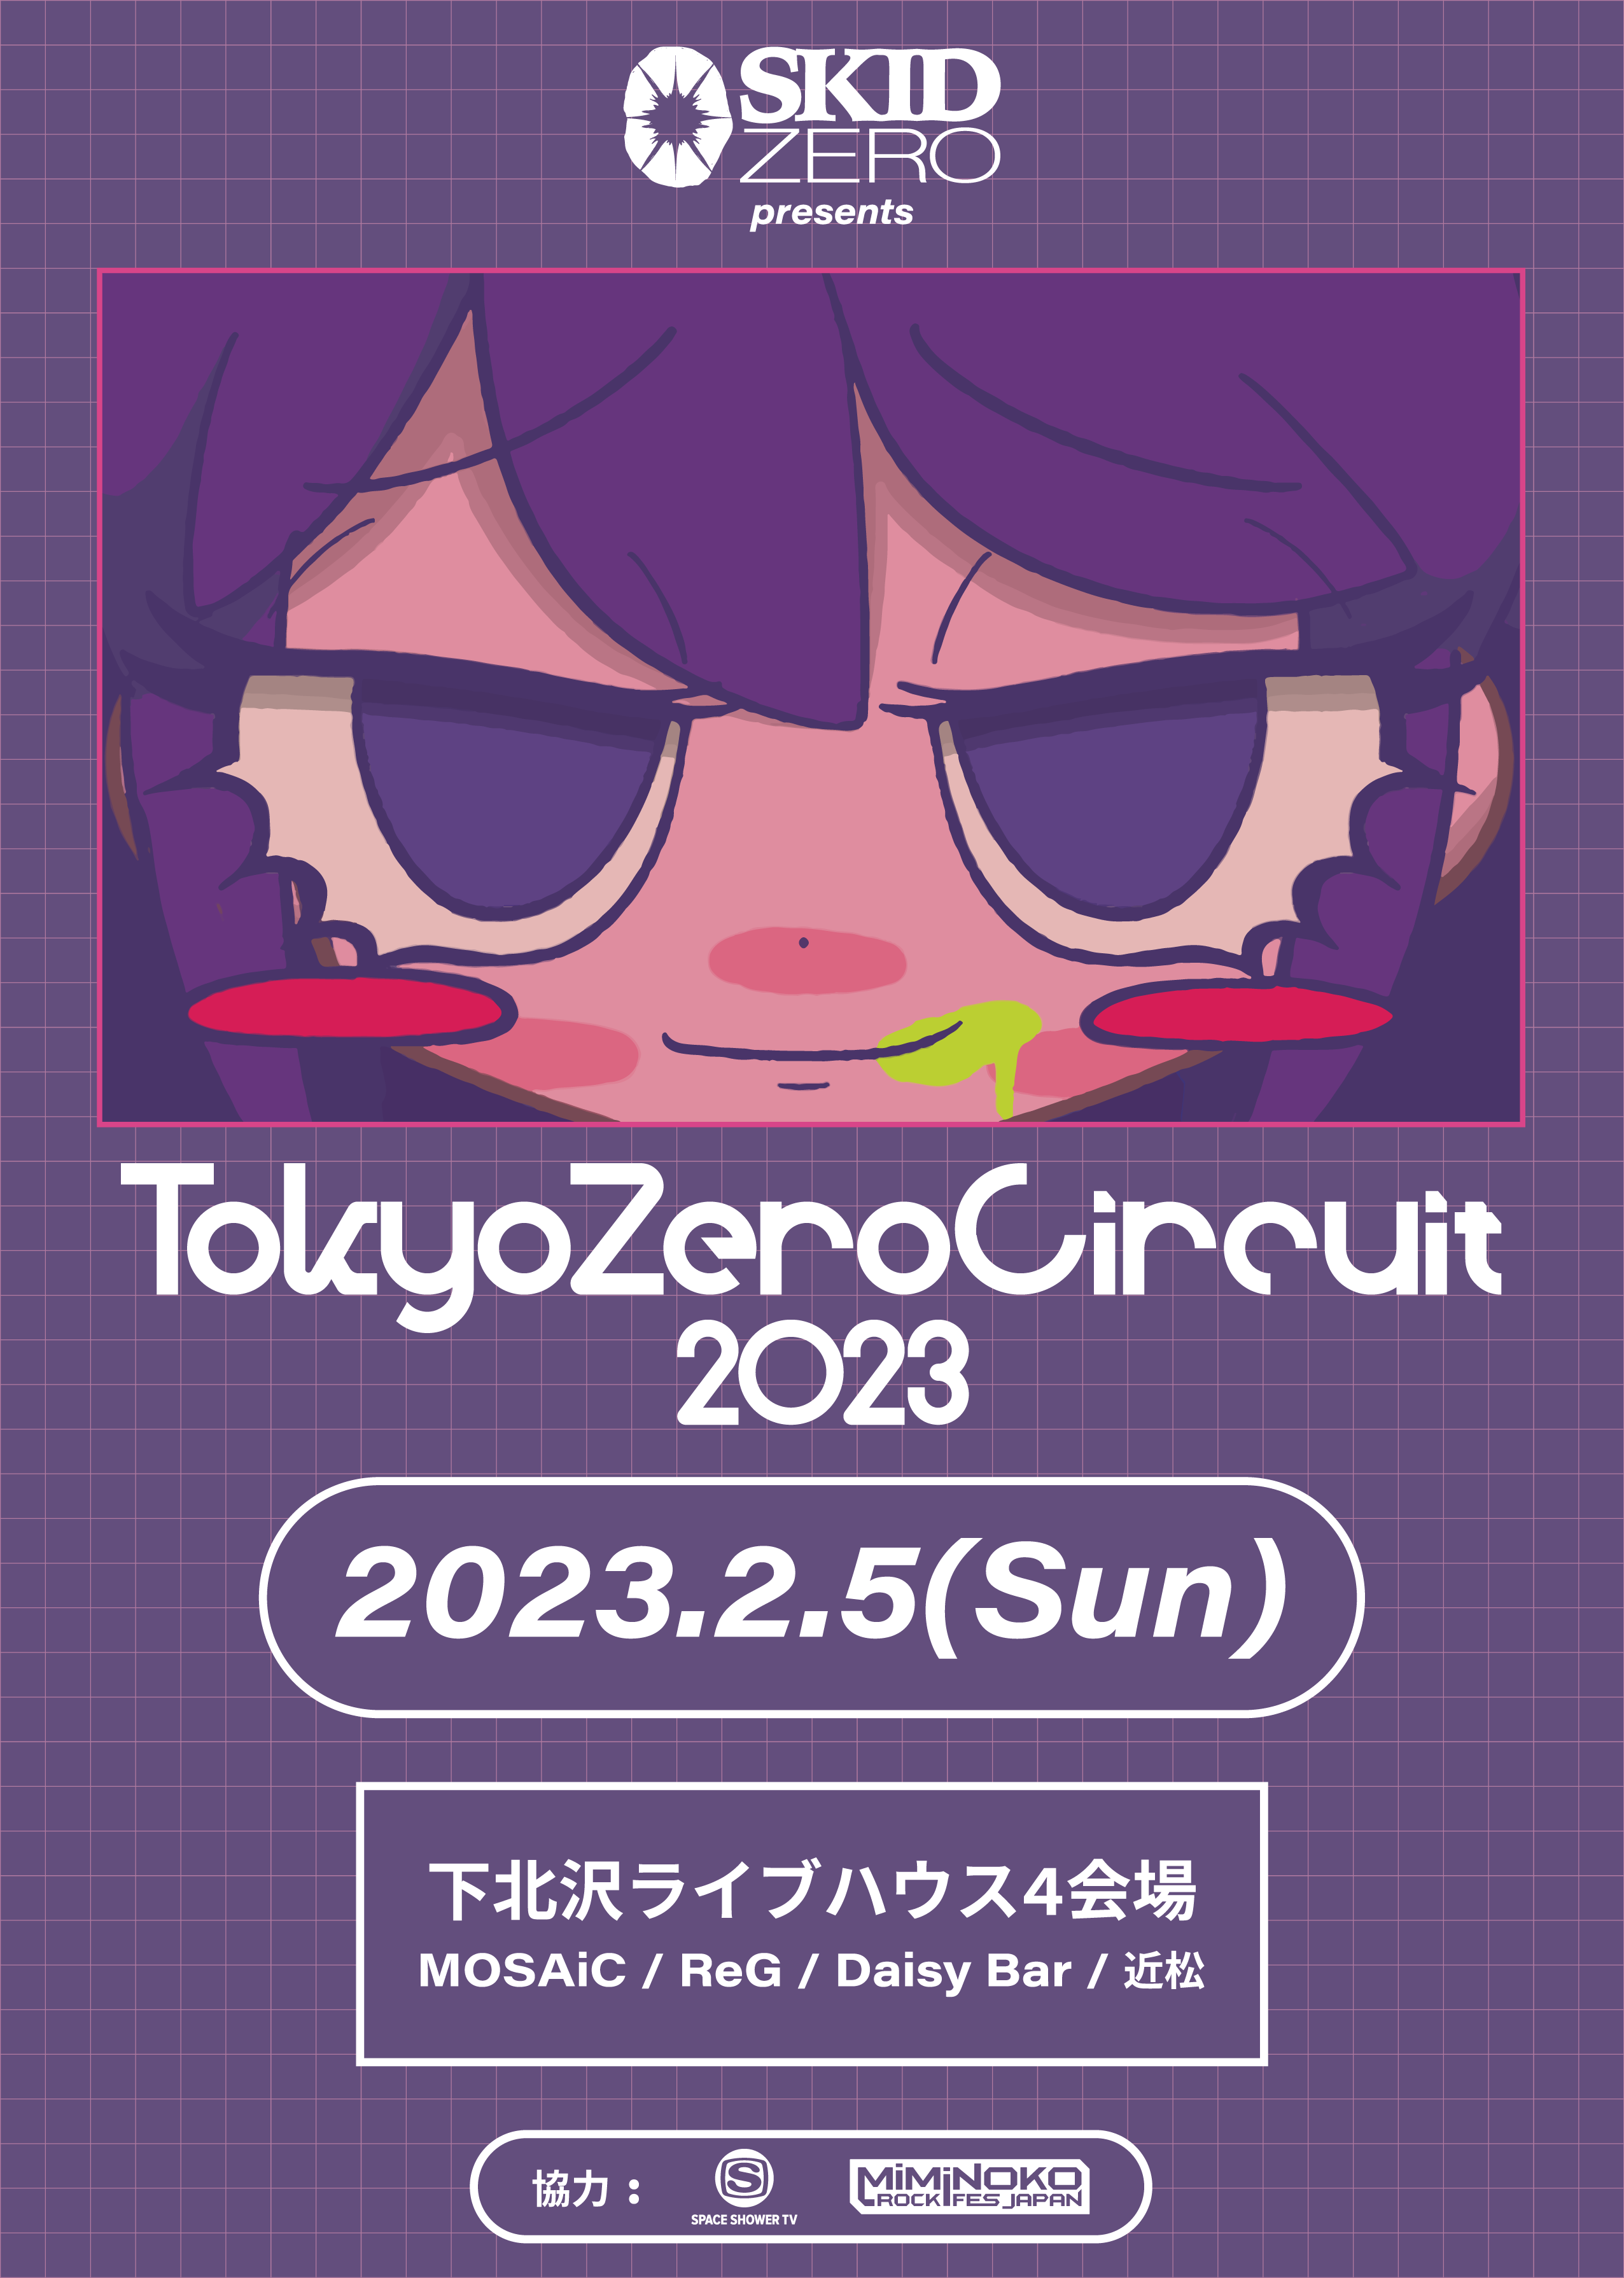 SKID ZERO pre. Tokyo Zero Circuit 2023